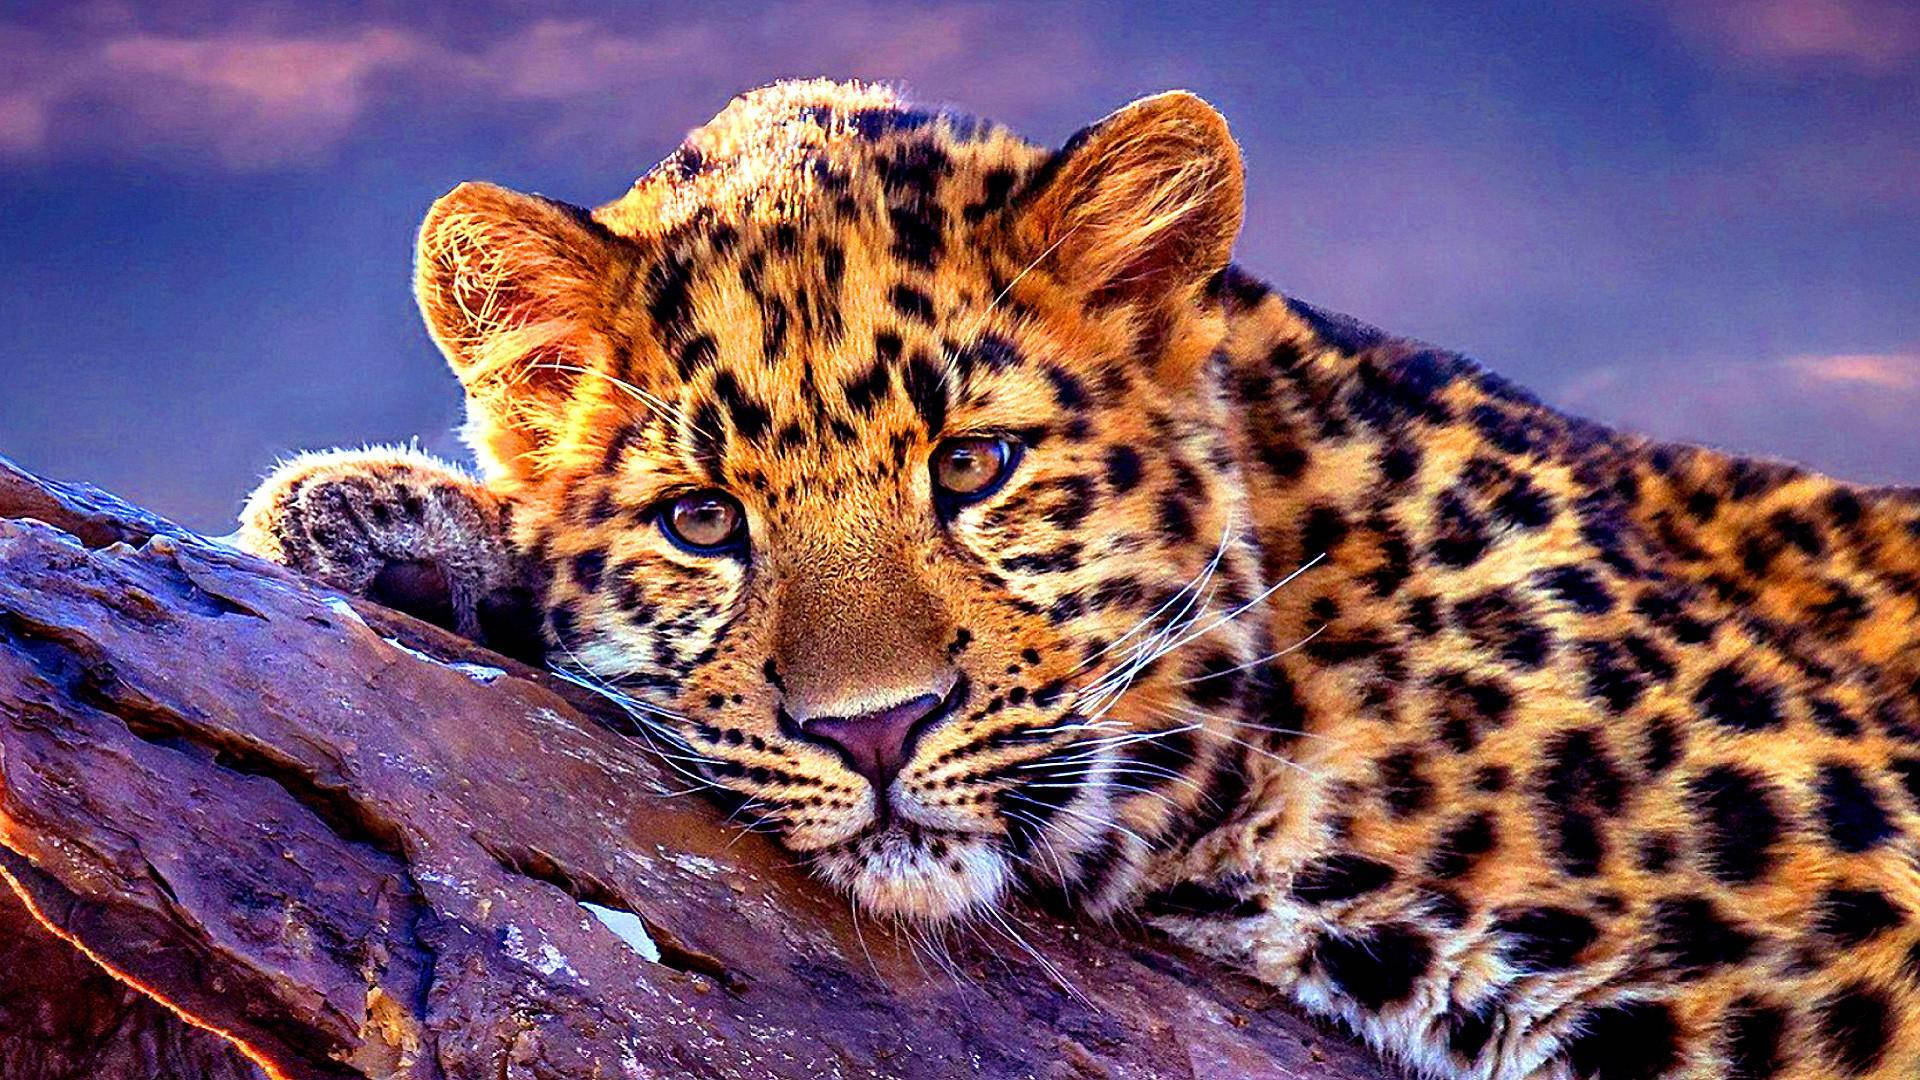 Leopard Animal Resting On Damp Rock Wallpaper